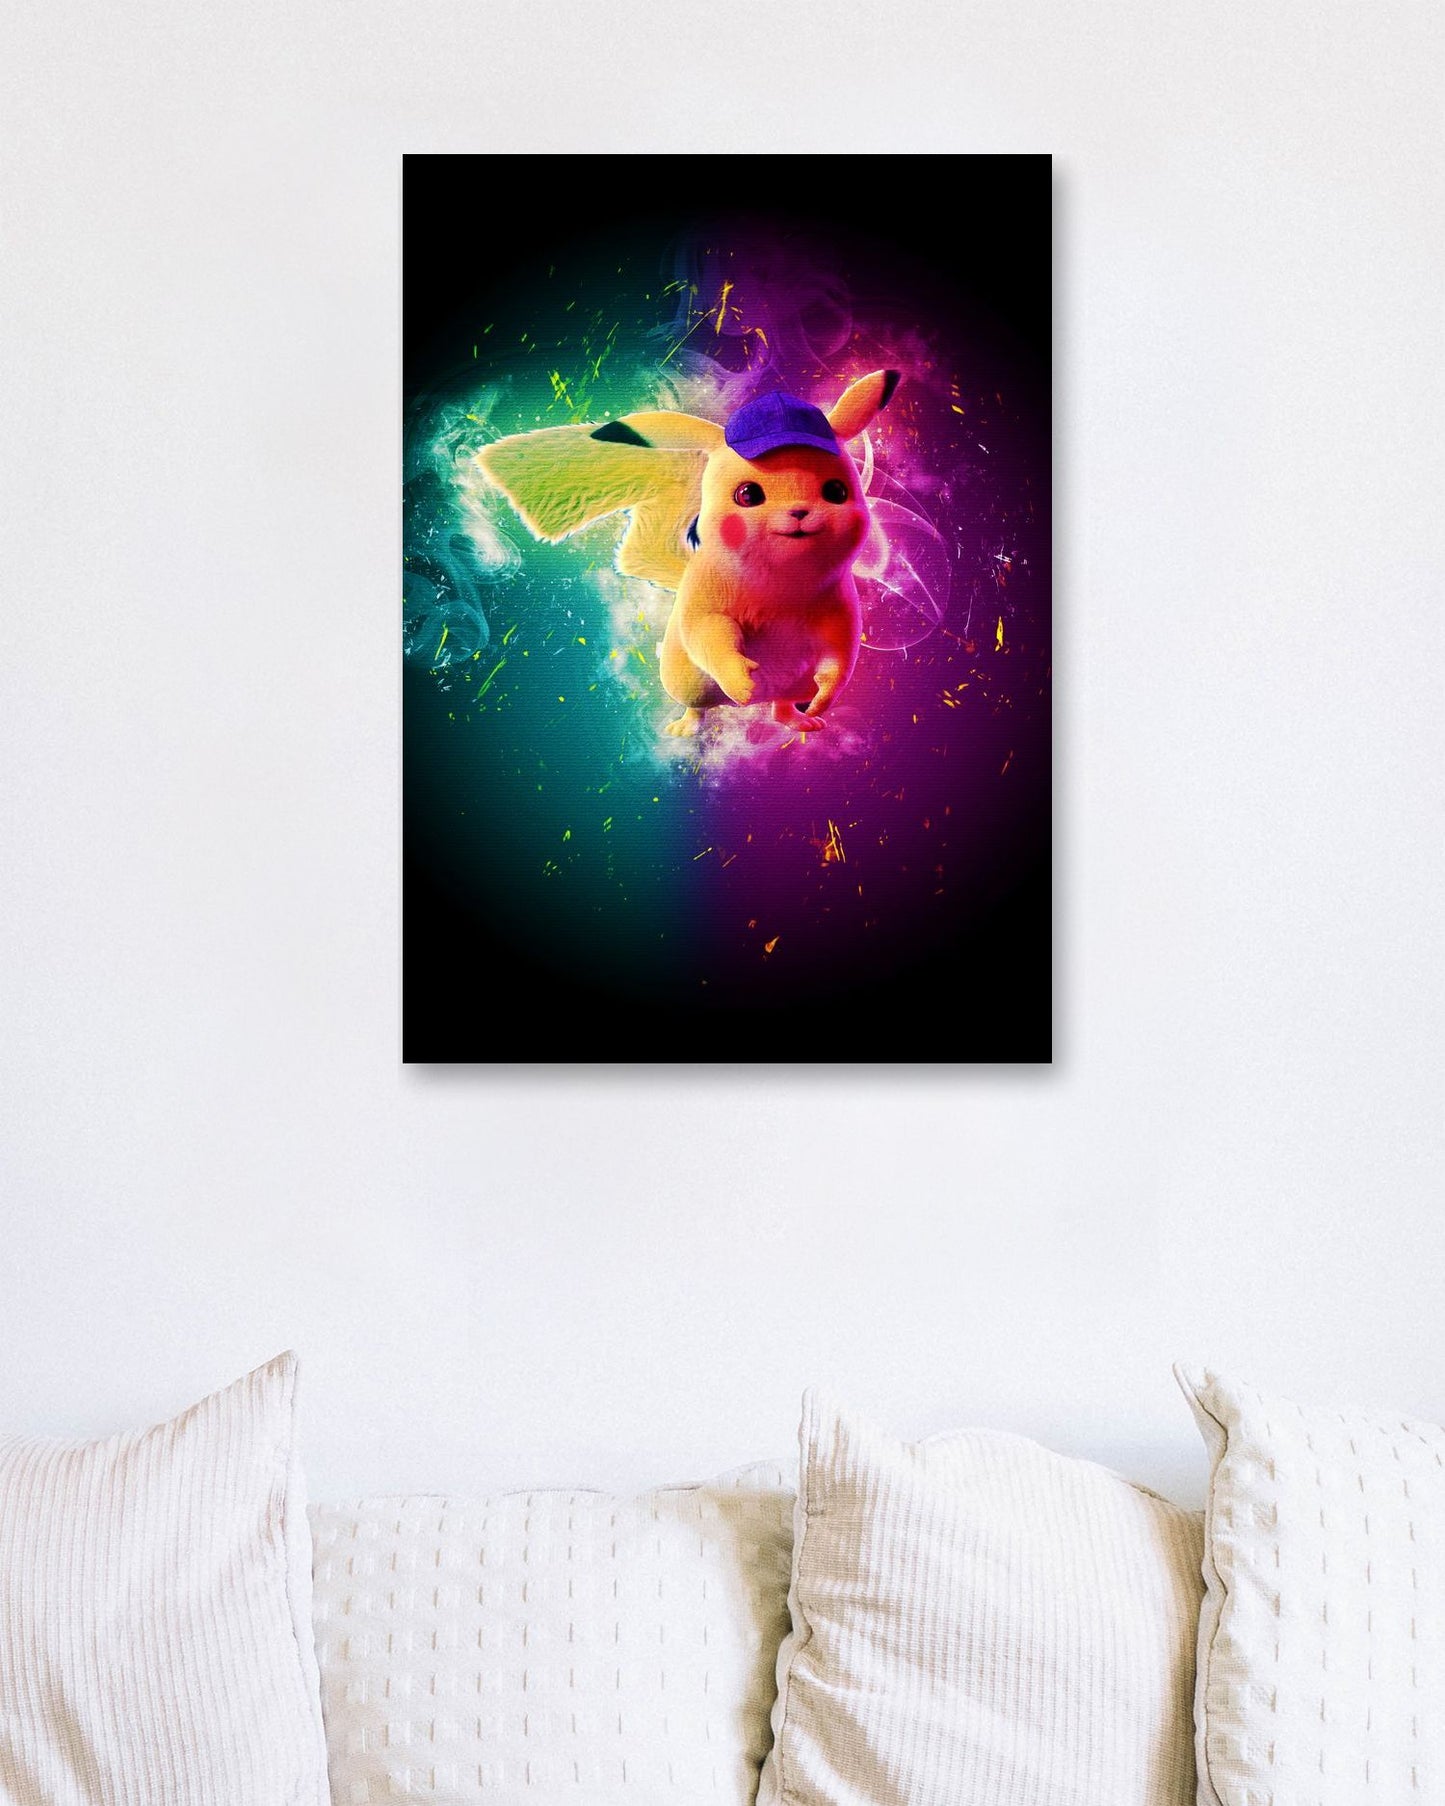 pikachu digital art - @Baracca